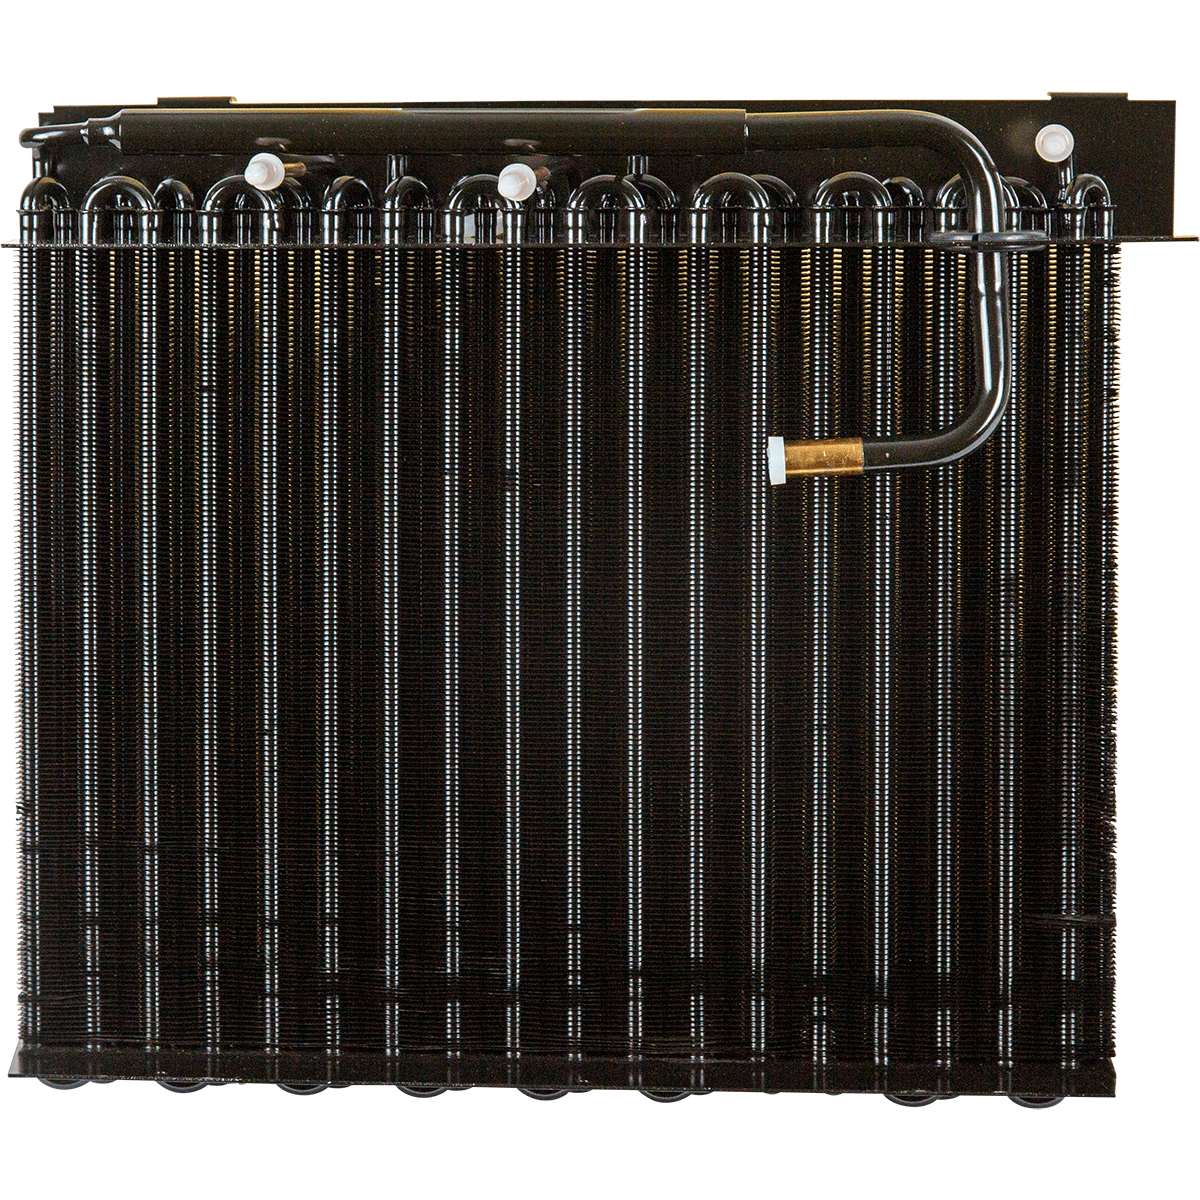 Santa Fe Replacement Evaporator Coil For Advance90 Dehumidifier (4034011-02)